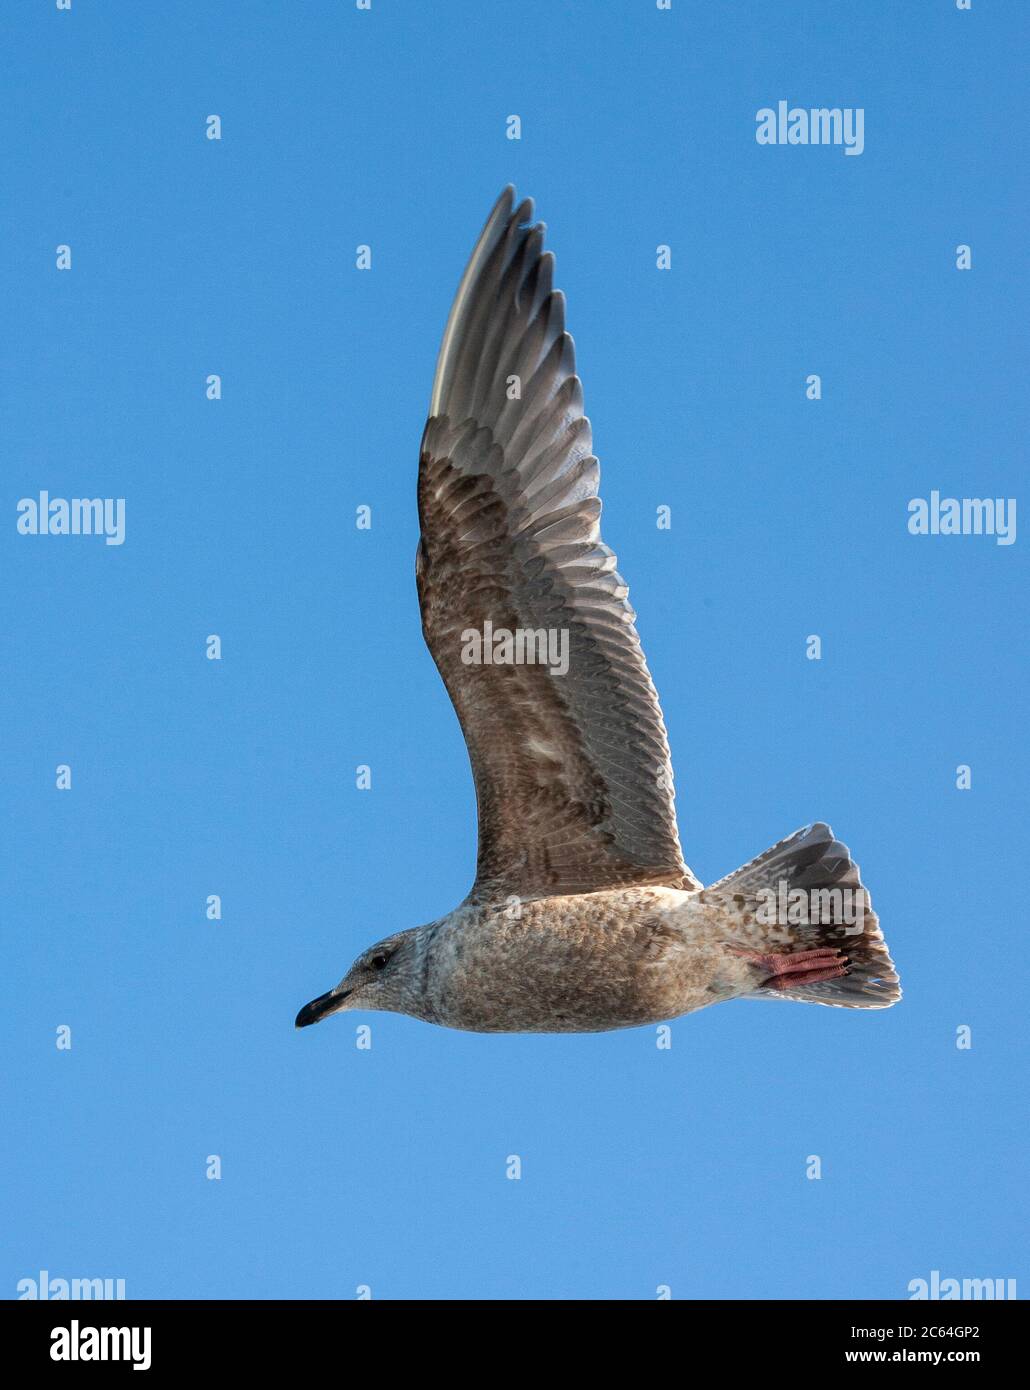 Second calendar year Slaty-backed Gull (Larus schistisagus) on Hokkaido, Japan. In flight, seen from below. Stock Photo